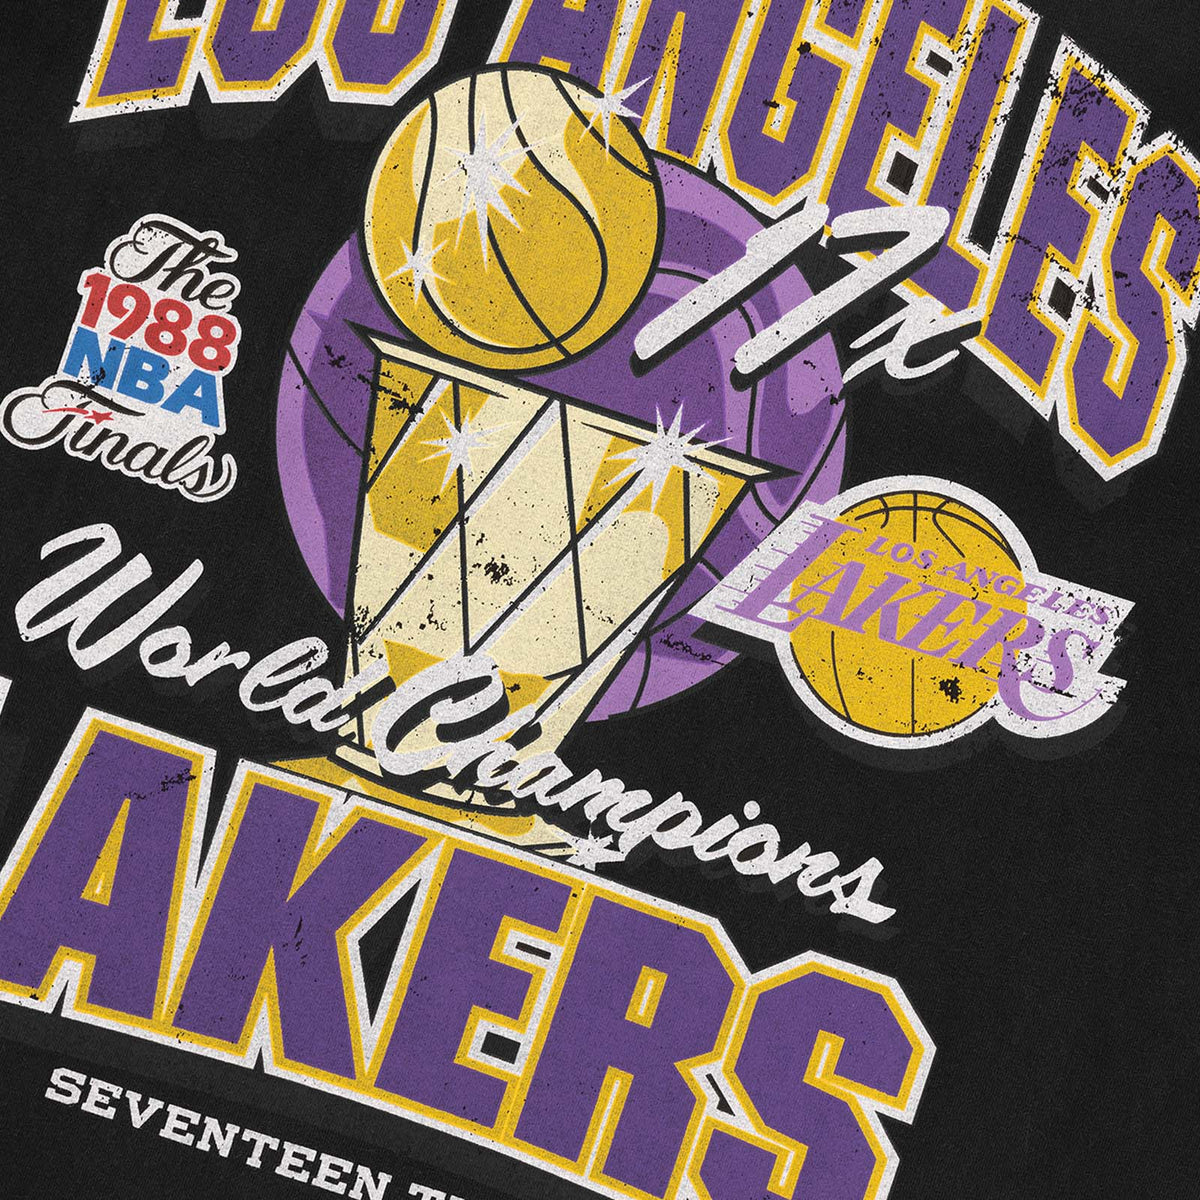 Lakers Vintage Los Angeles t Shirt Champion Women's size Medium